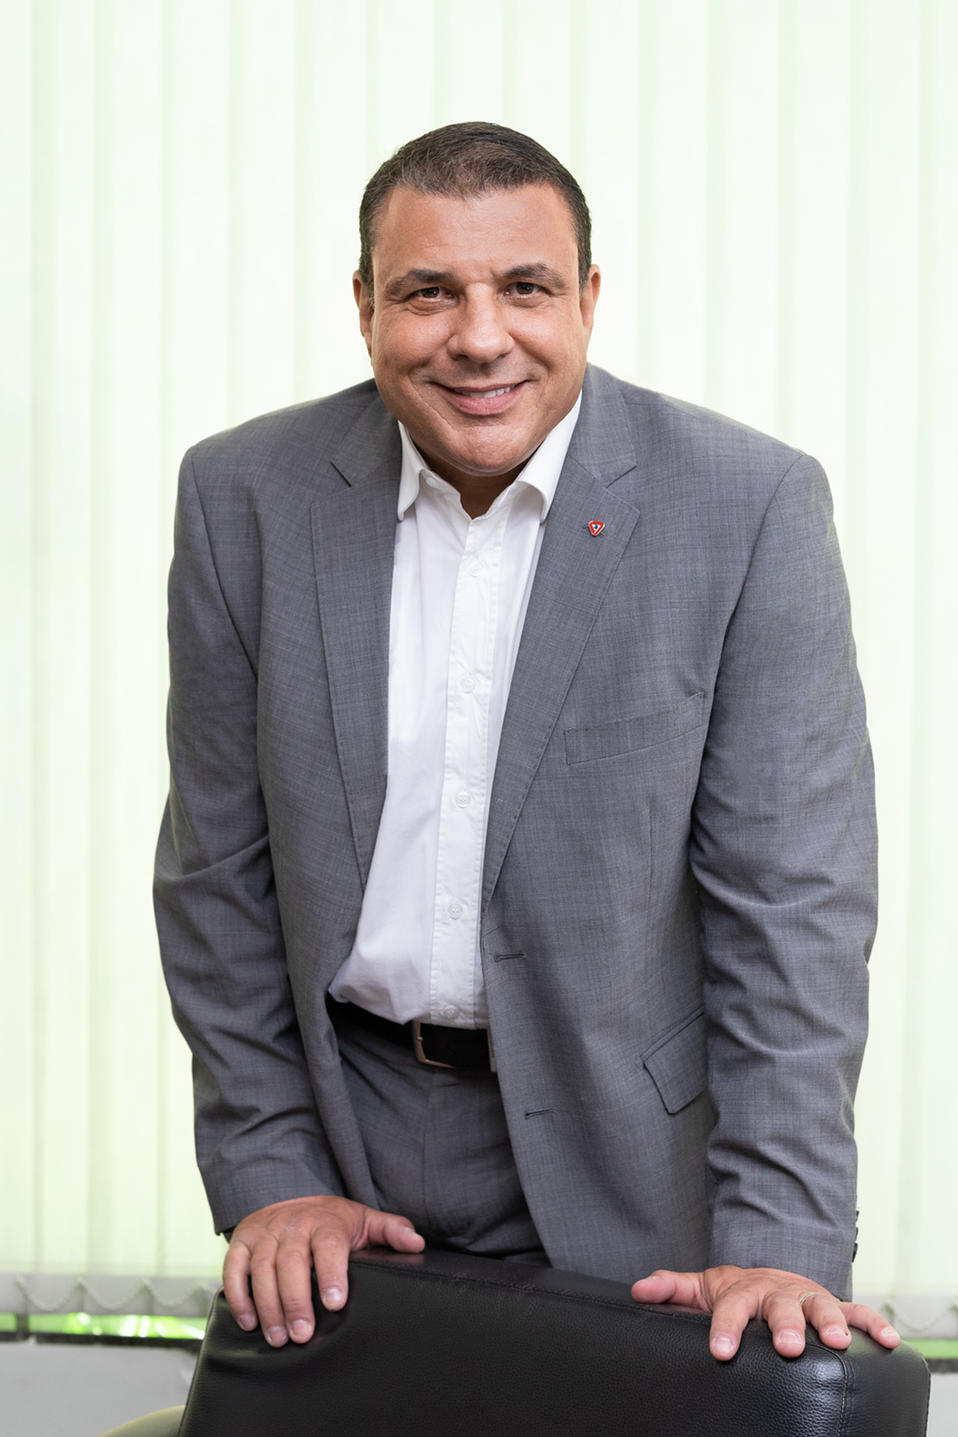 Milton Penna, CFO of Vitamedic's parent company Grupo José Alves